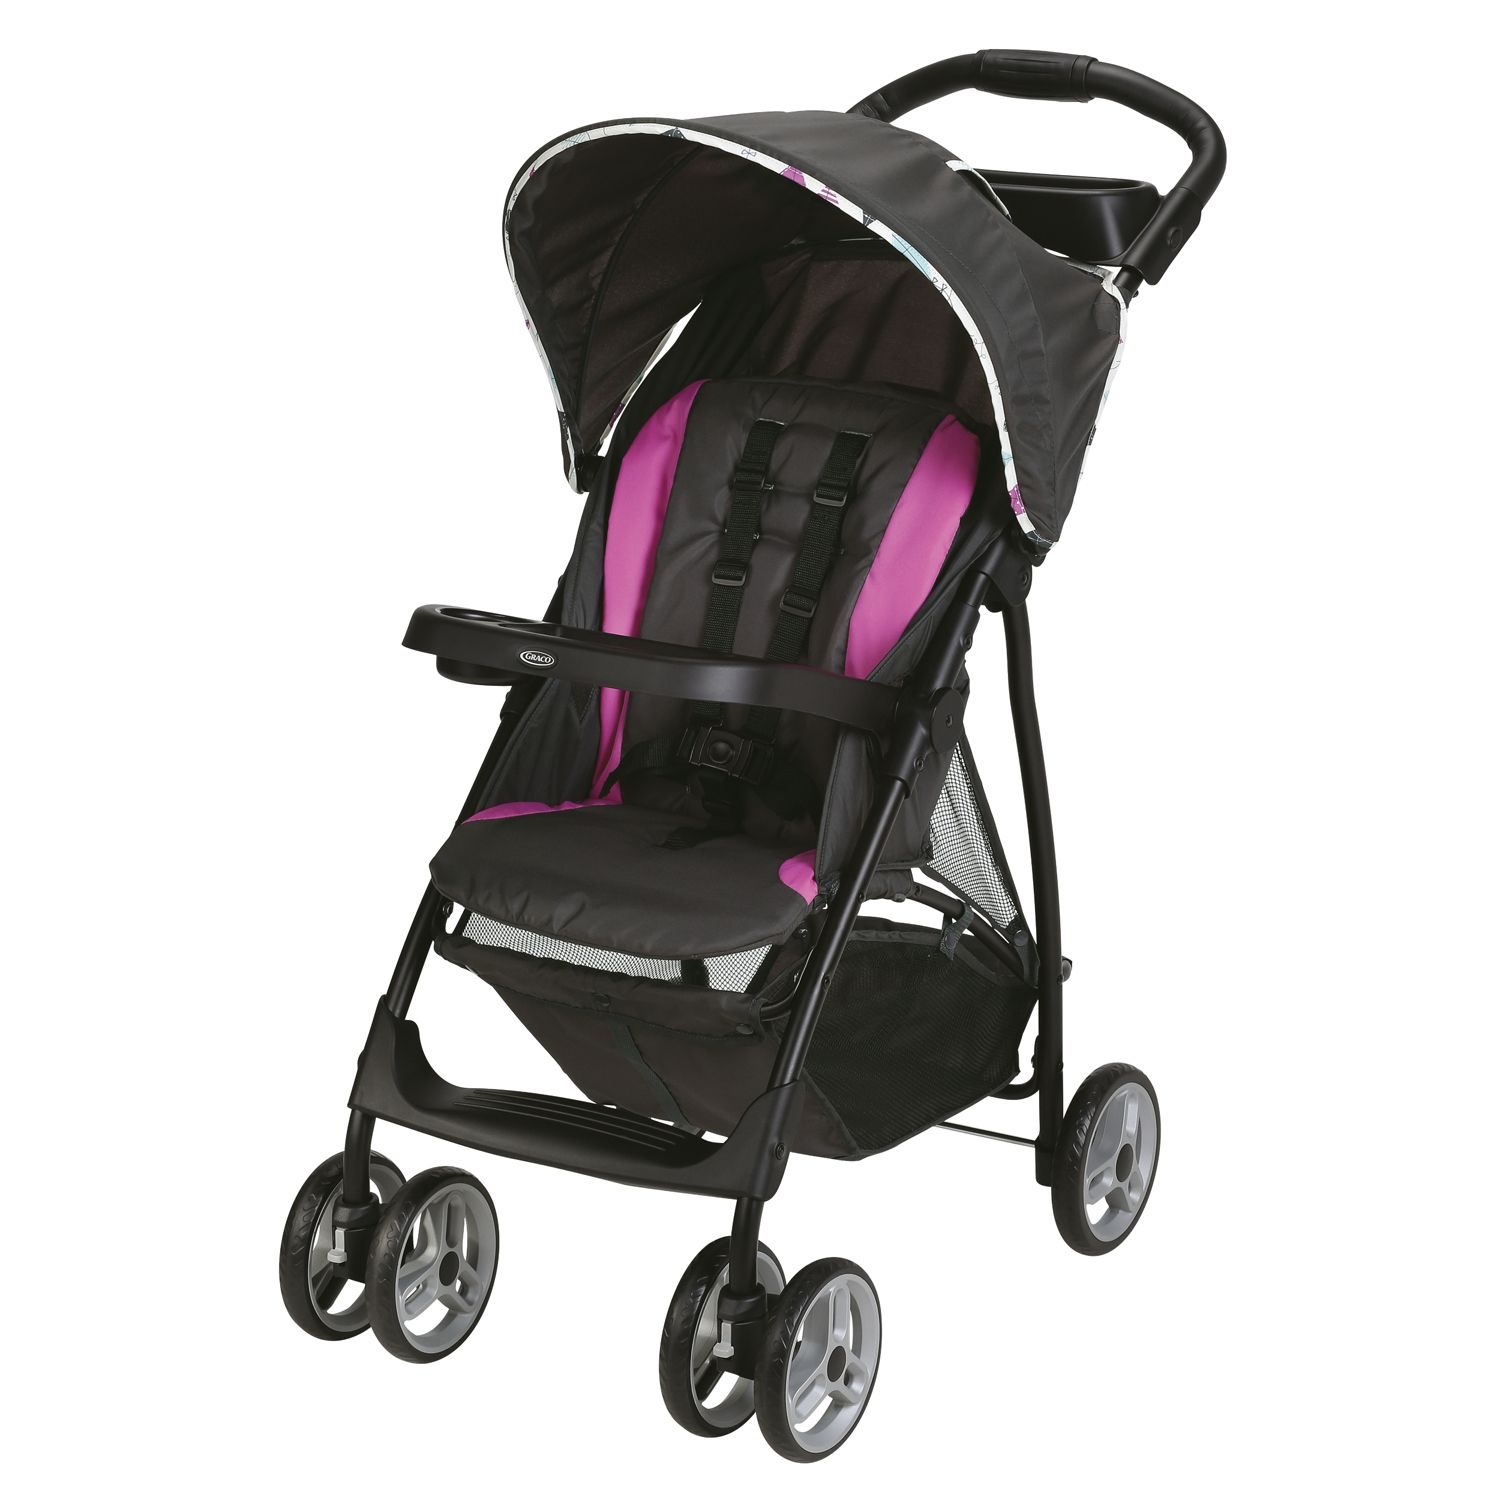 lightweight stroller purple